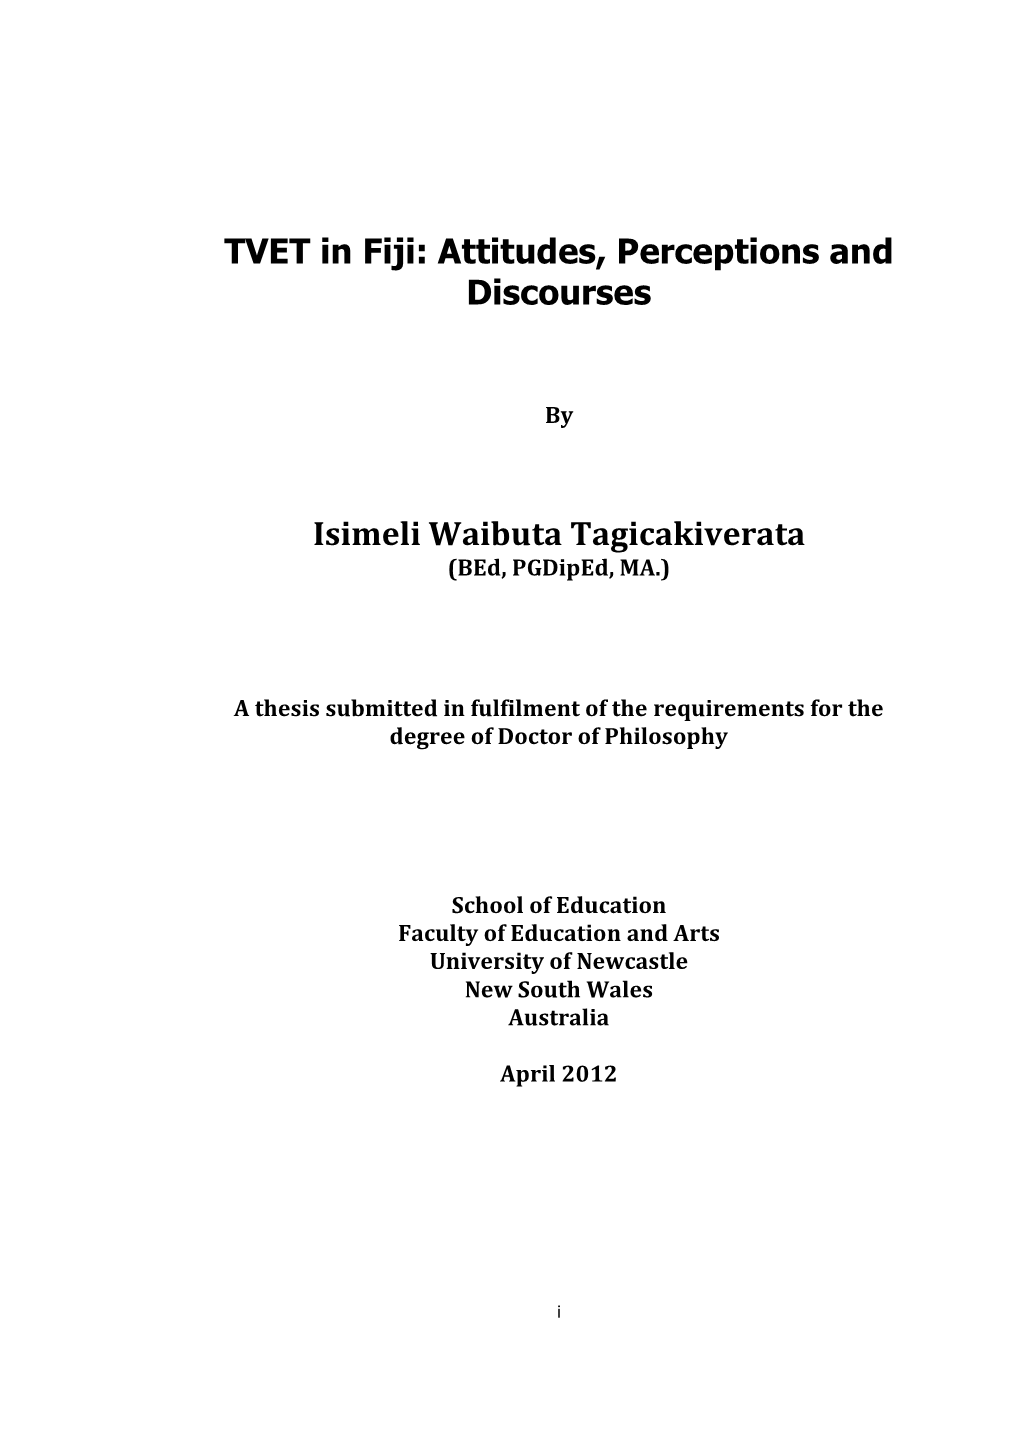 TVET in Fiji: Attitudes, Perceptions and Discourses